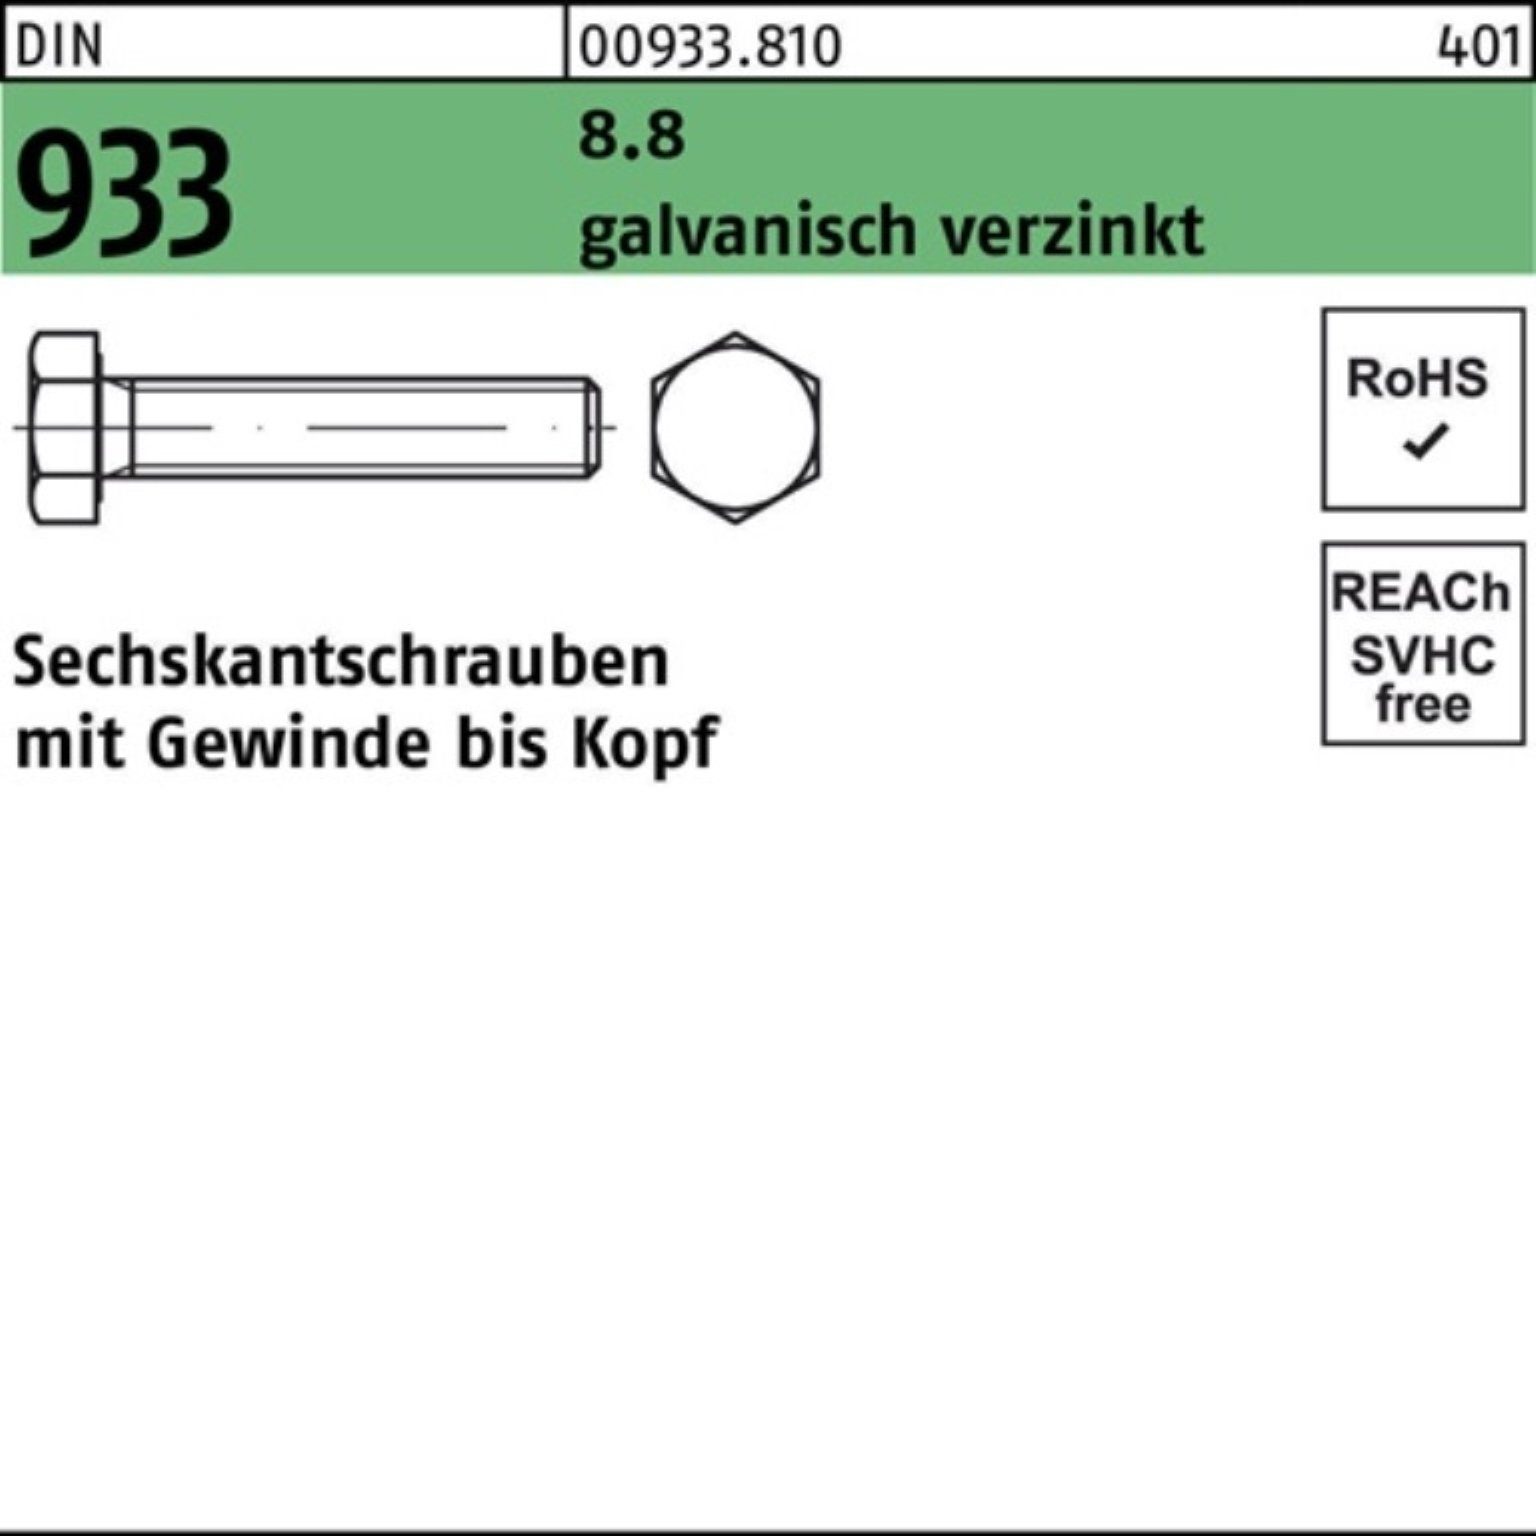 220 Sechskantschraube 8.8 Stü Reyher Sechskantschraube 100er DIN VG Pack M36x 1 933 galv.verz.